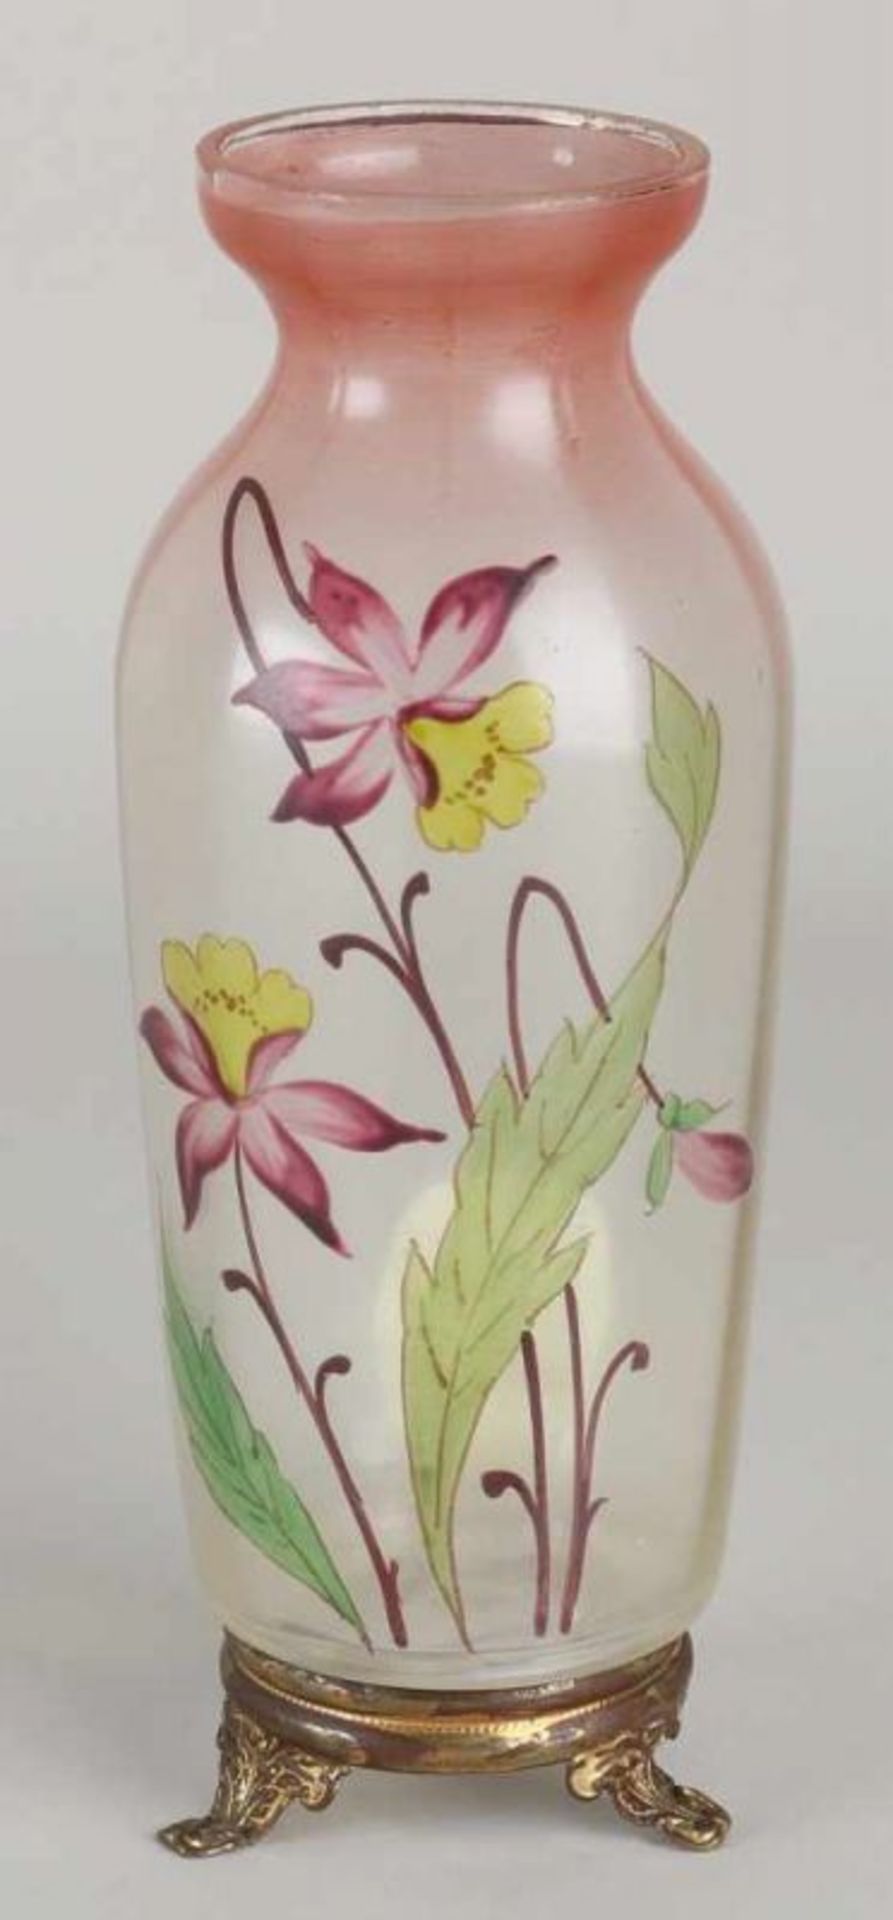 Antique hand-painted Jugendstil glass vase with brass base. Circa 1915. Size: 17 cm. In good